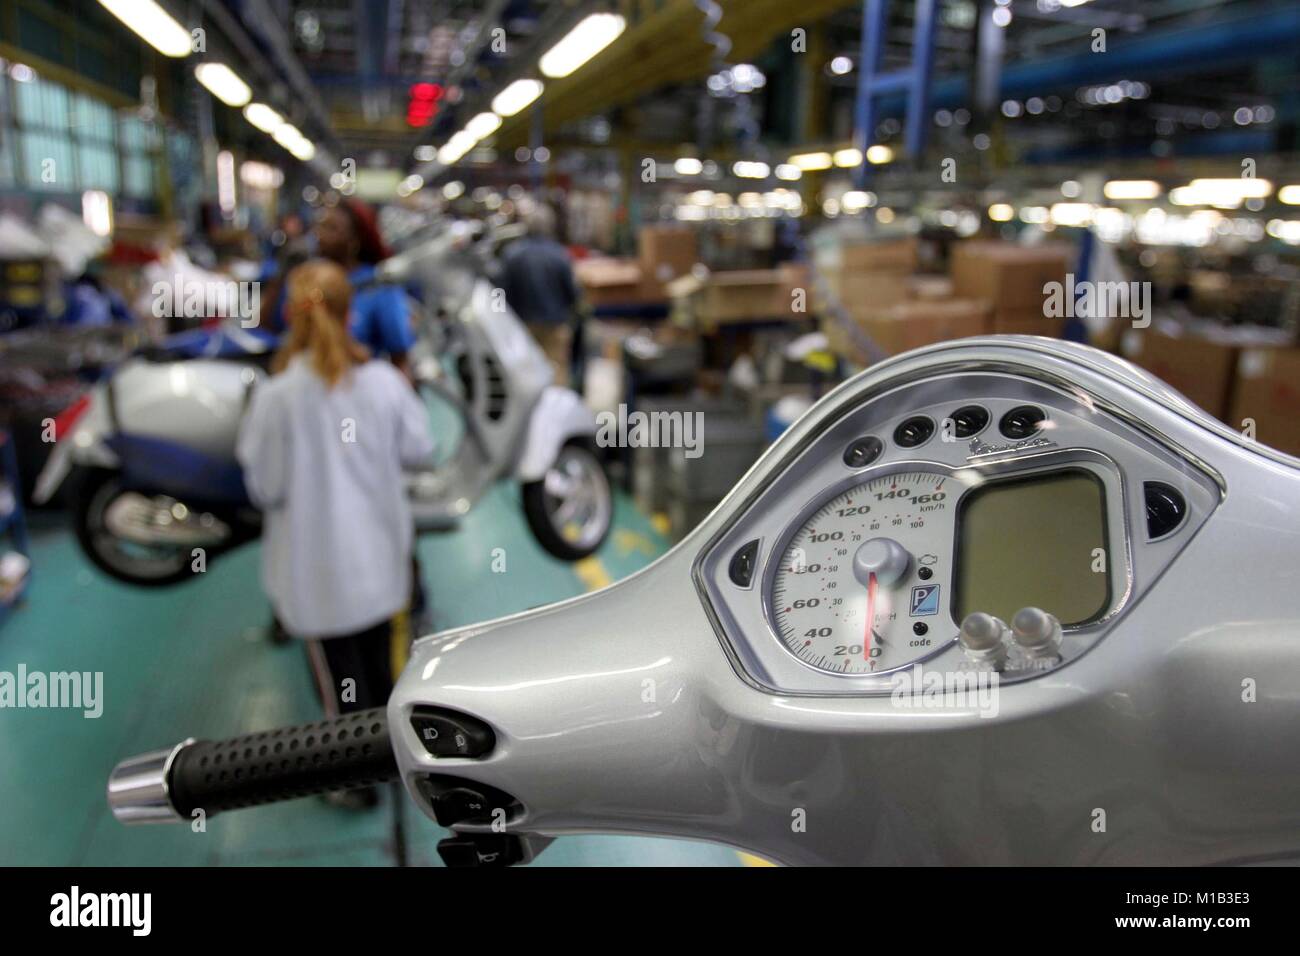 Piaggio Fabrik, die Produktion von Motorrädern und Motorrollern, Pontedera, Pisa, Italien Credit © Riccardo Squillantini/Sintesi/Alamy Stock Foto Stockfoto